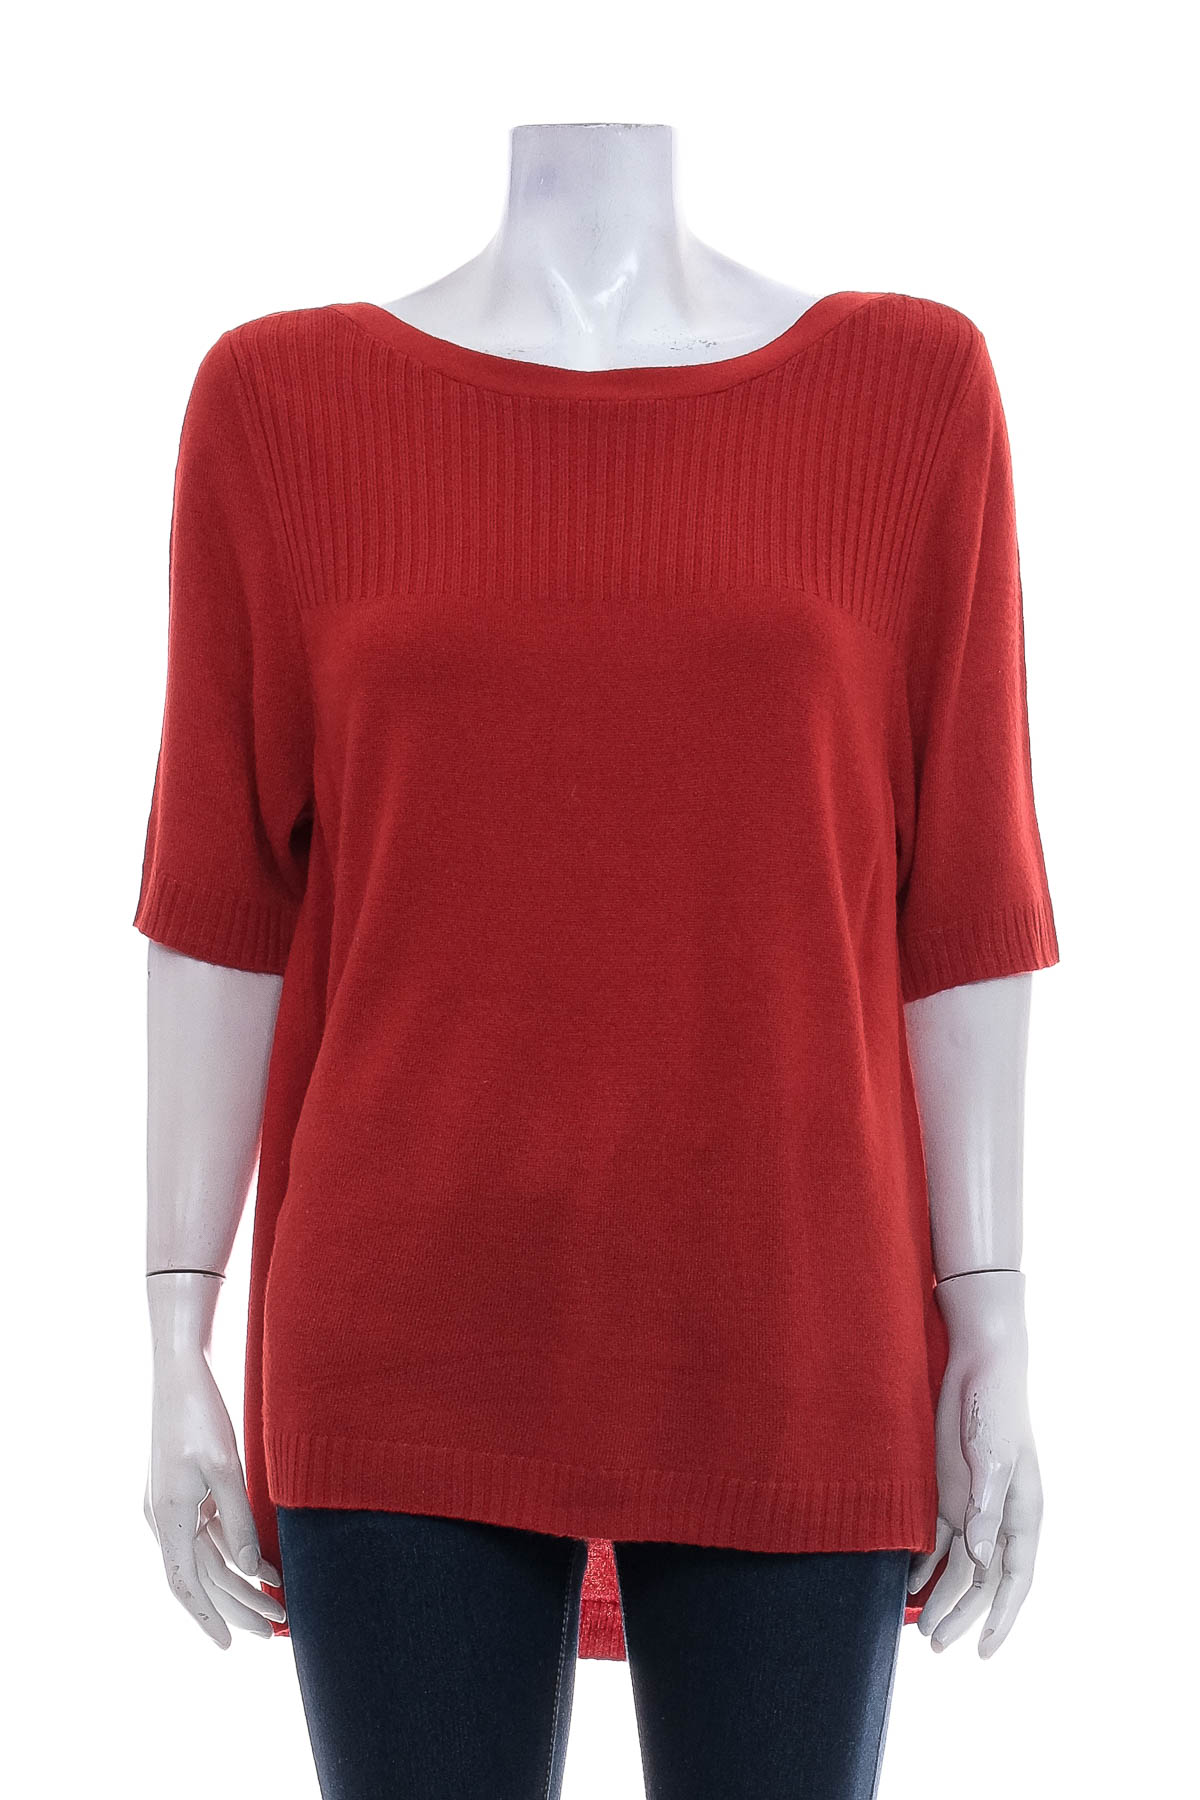 Women's sweater - Emerson - 0